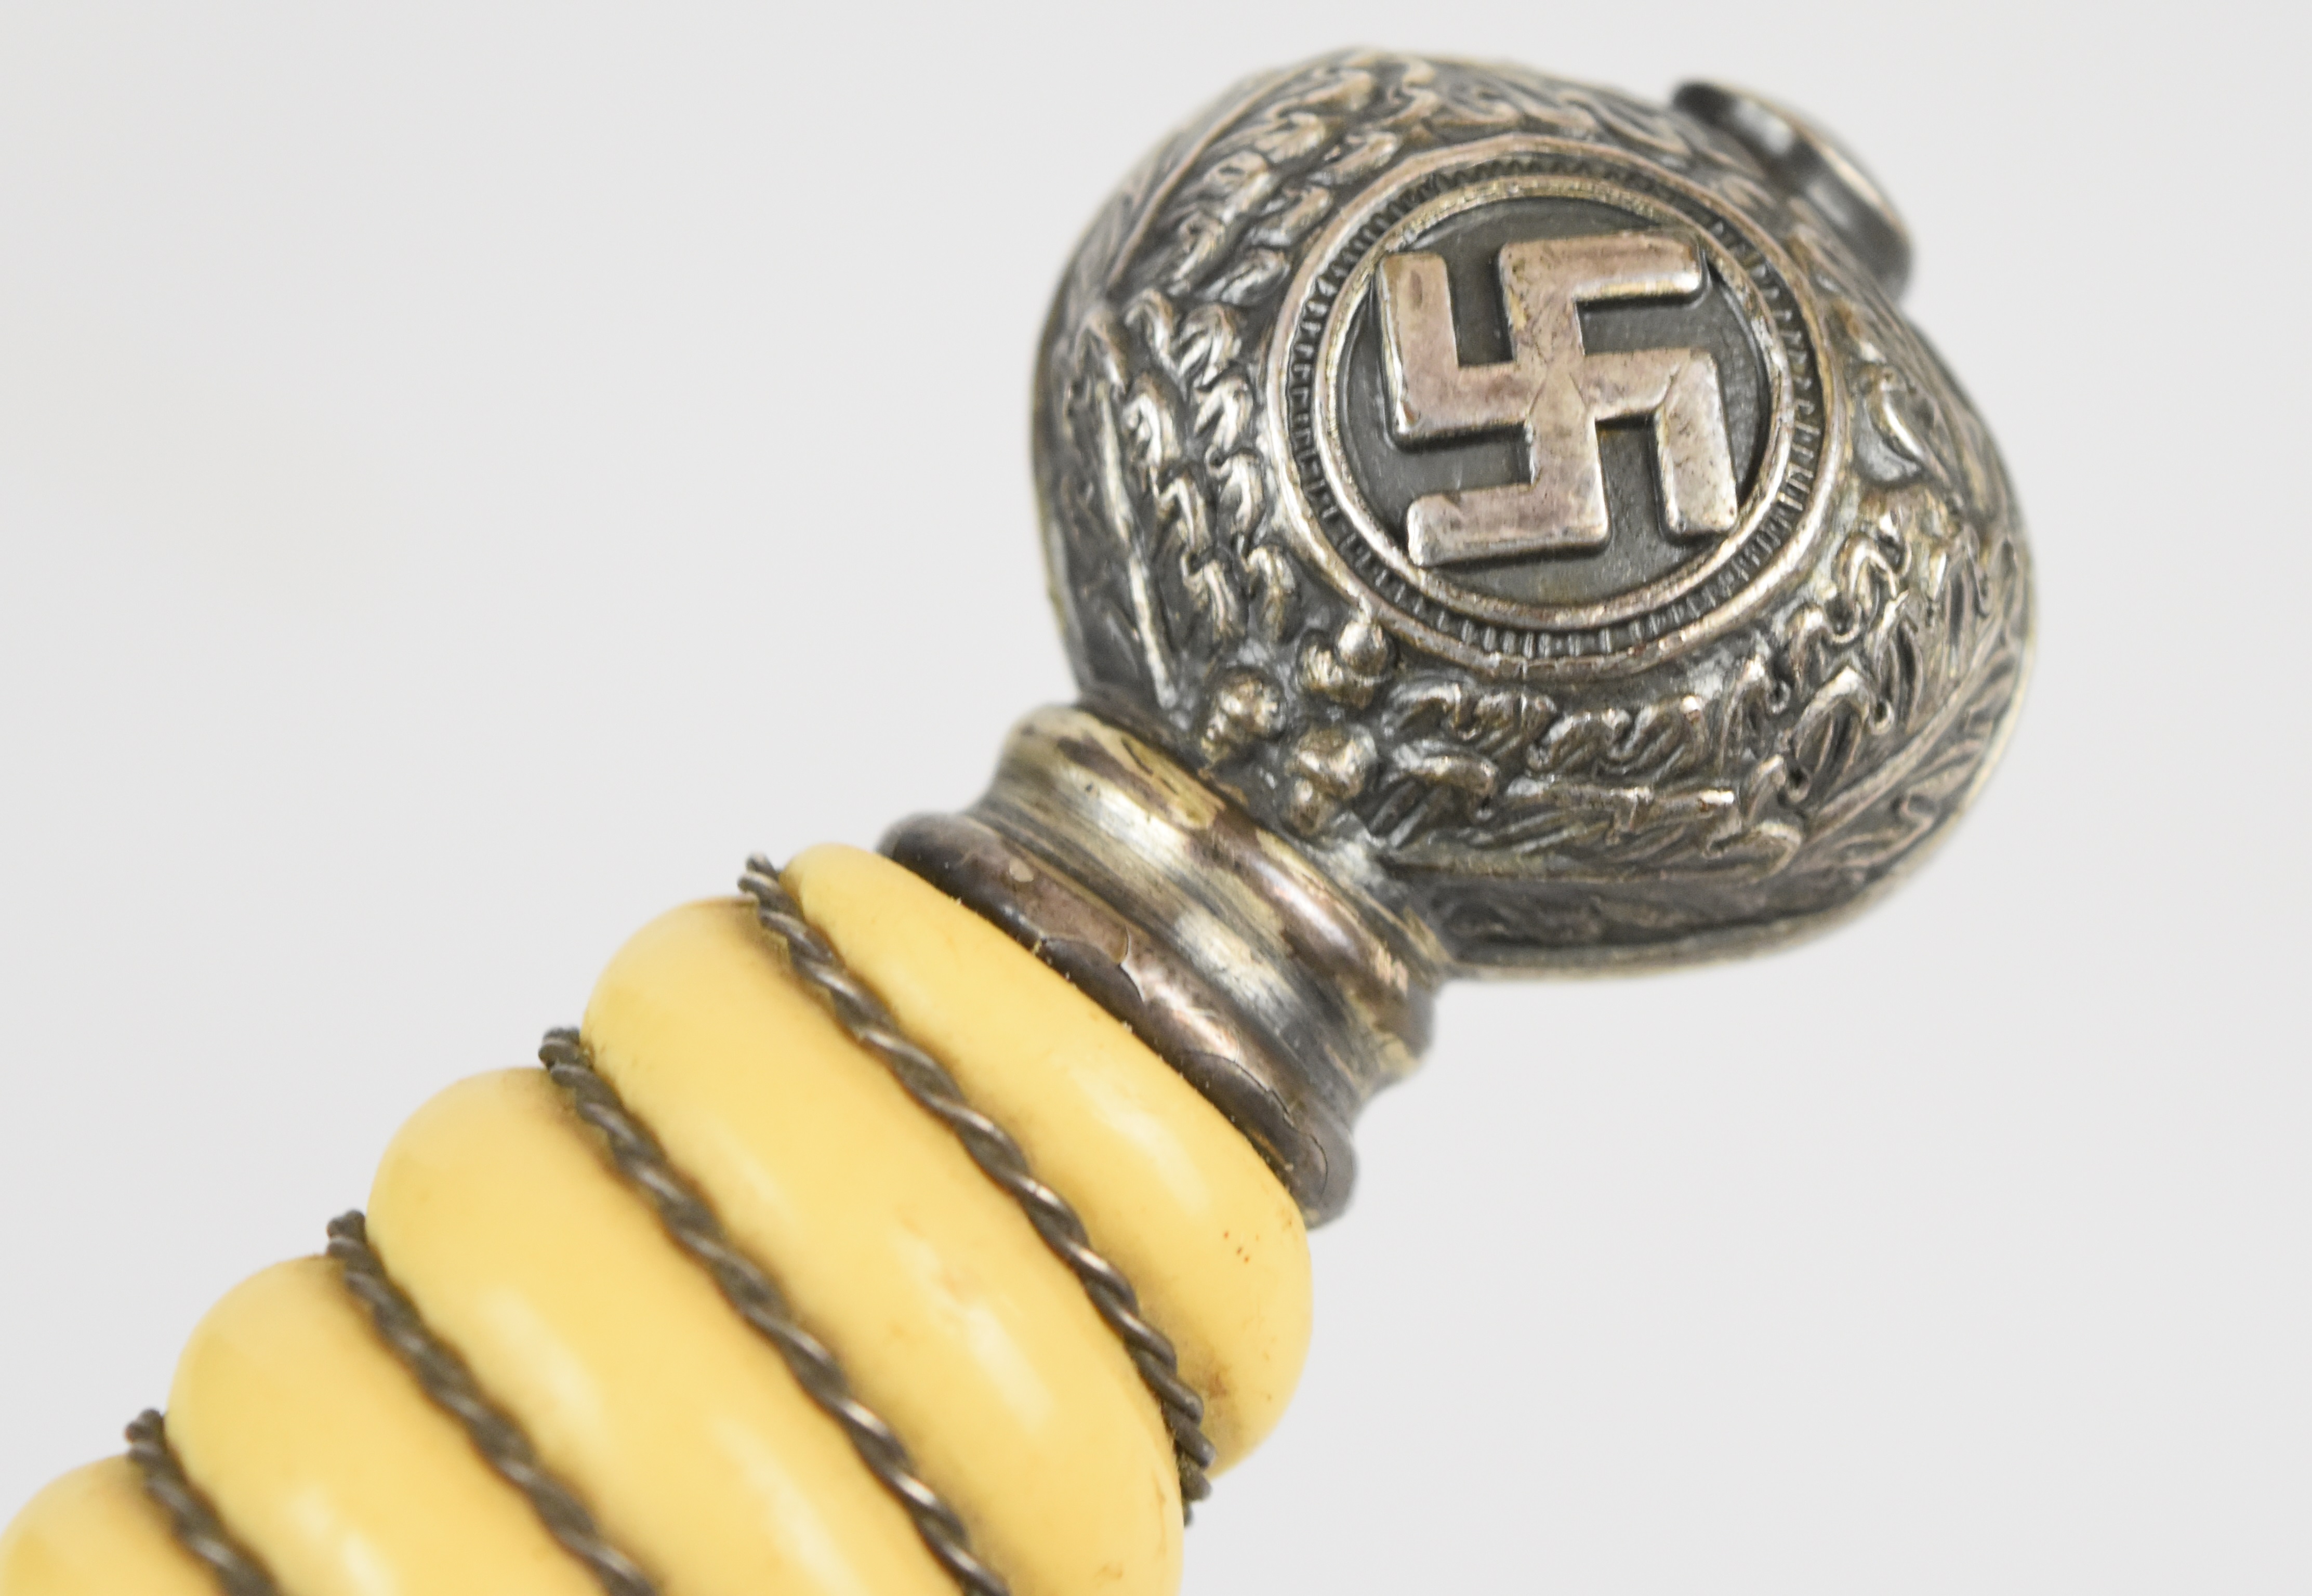 German WW2 Nazi Third Reich Luftwaffe officer's dress dagger with swastika and oak leaf decoration - Image 6 of 11